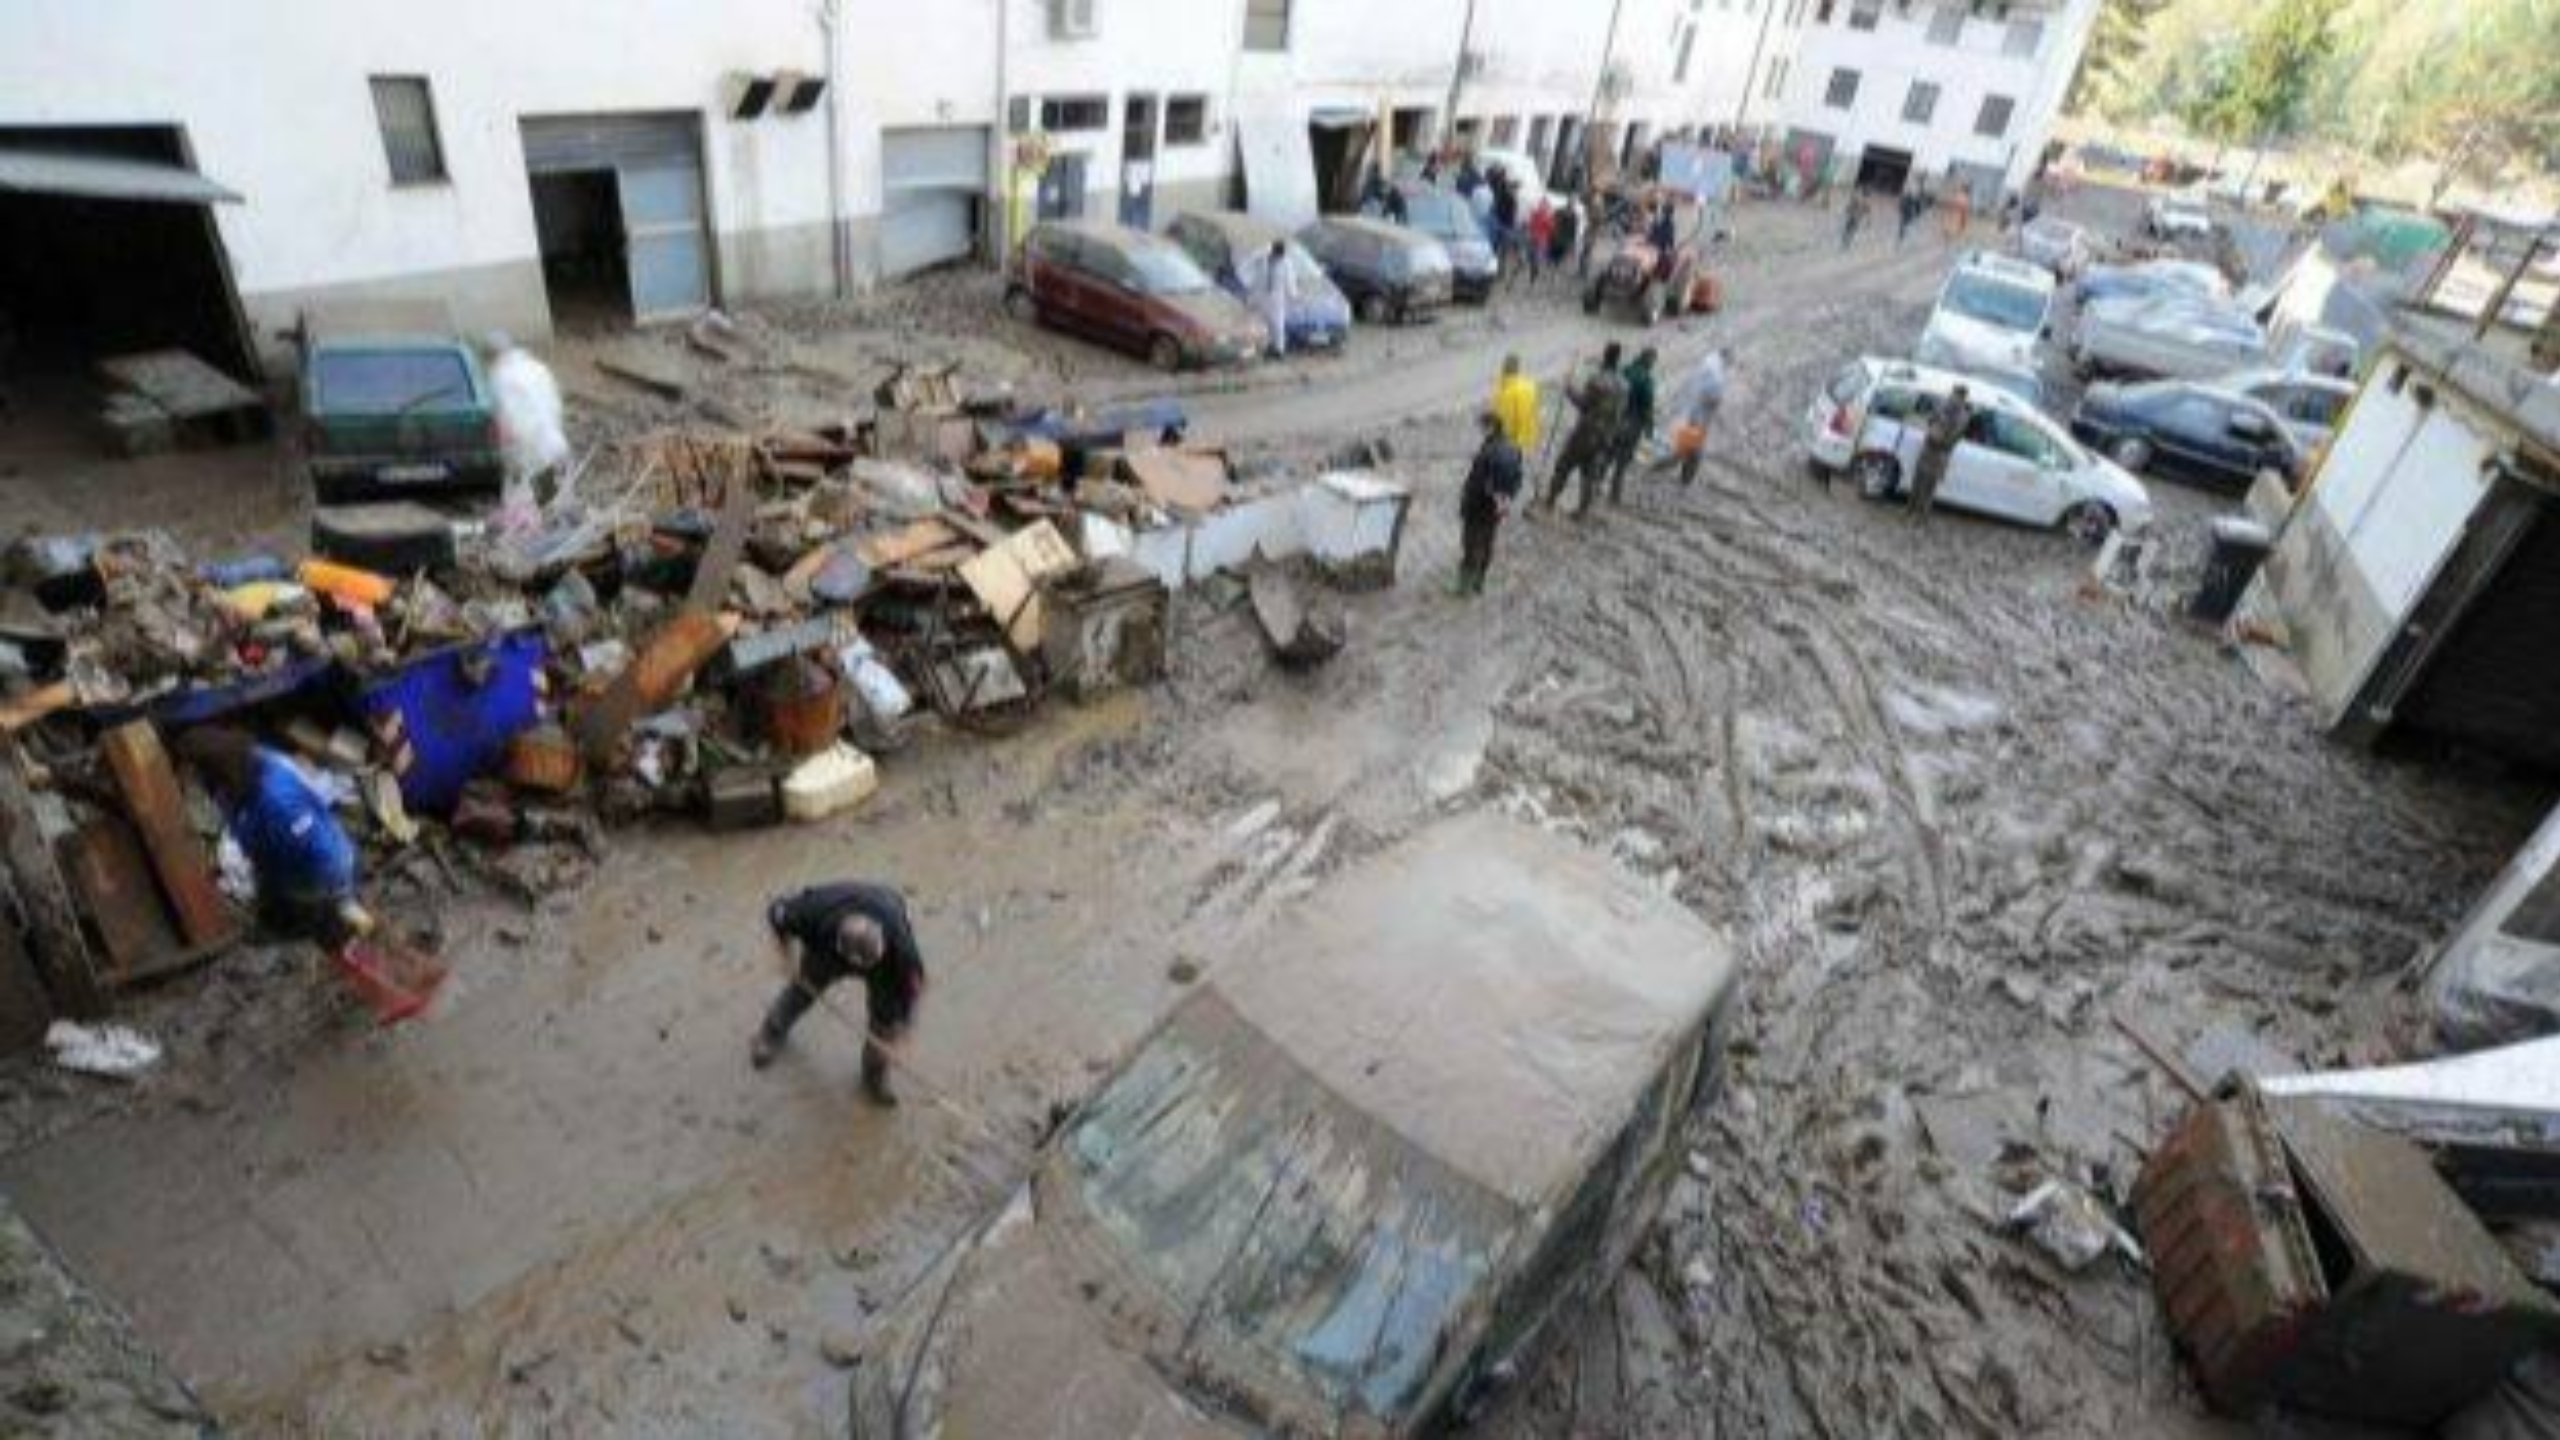 Tutti assolti a 12 anni dall’alluvione di Aulla. Barani: “Accuse infondate e stravaganti”